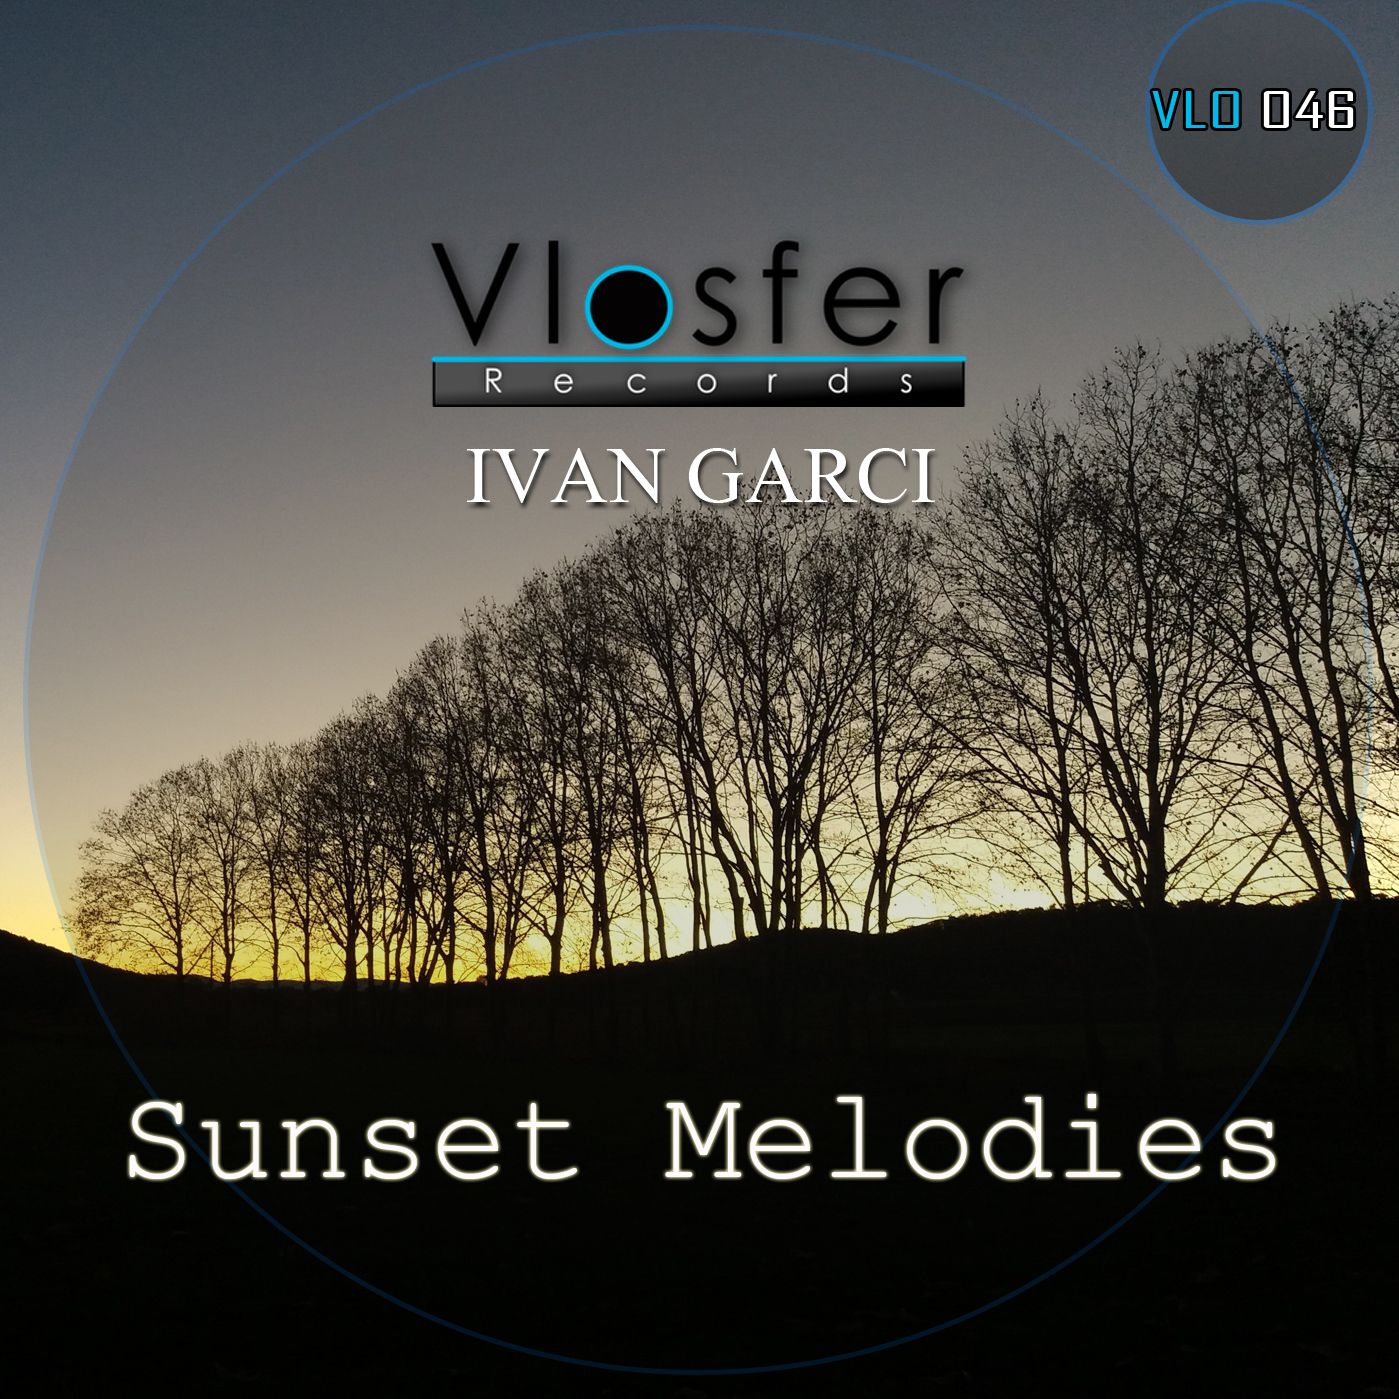 Muat turun Clear - Ivan Garci (low quality sound) Vlosfer records.